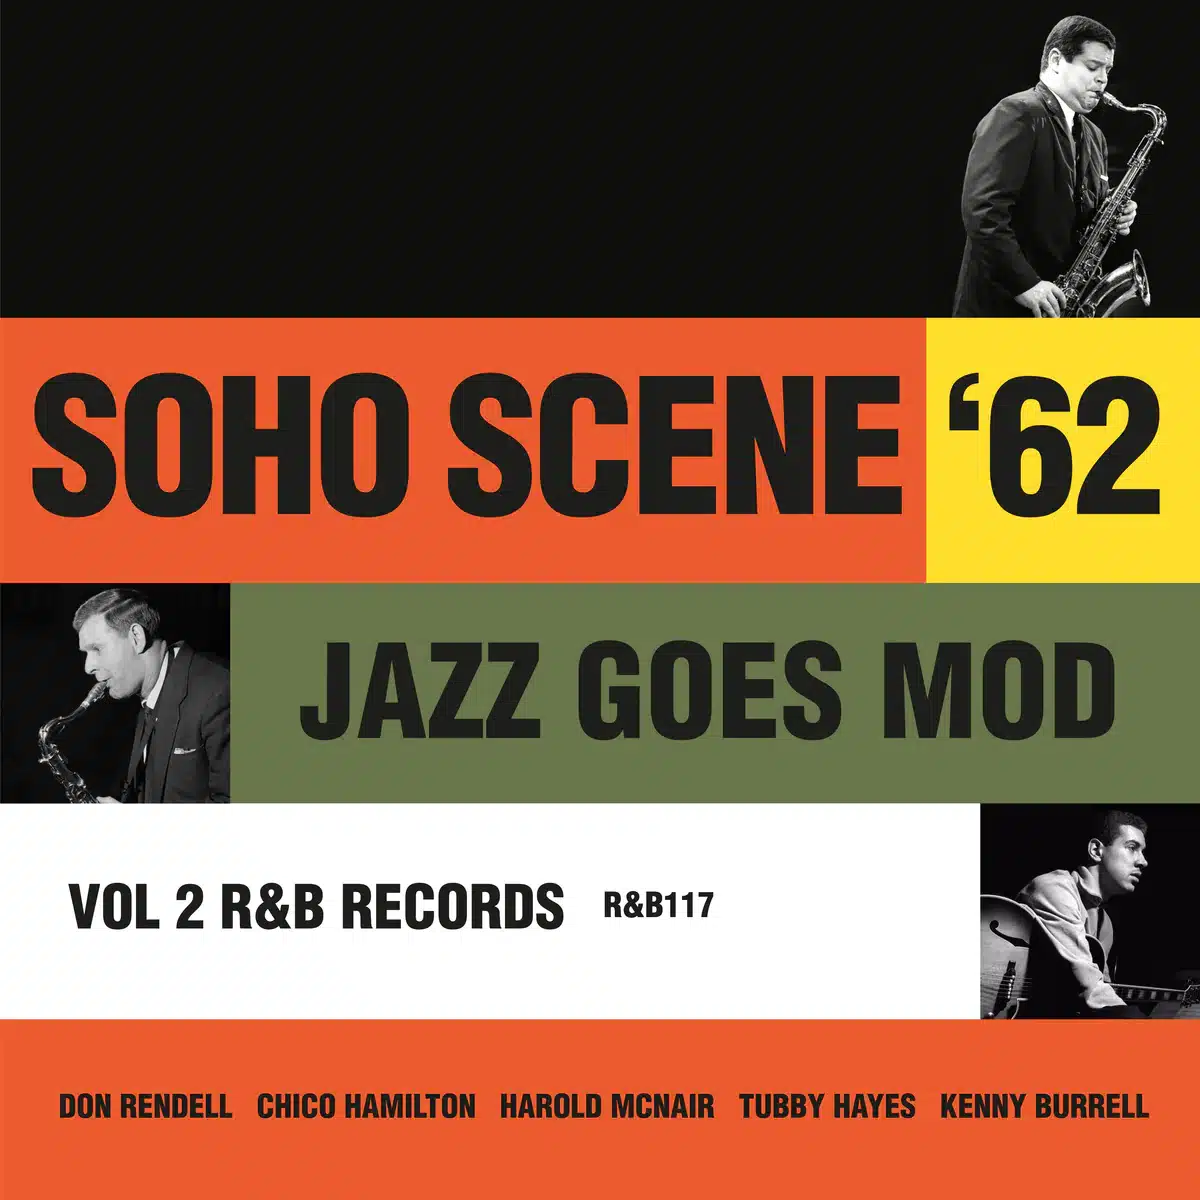 RSD_Various Artists - Soho Scene 62 jazz goes mod vol 2